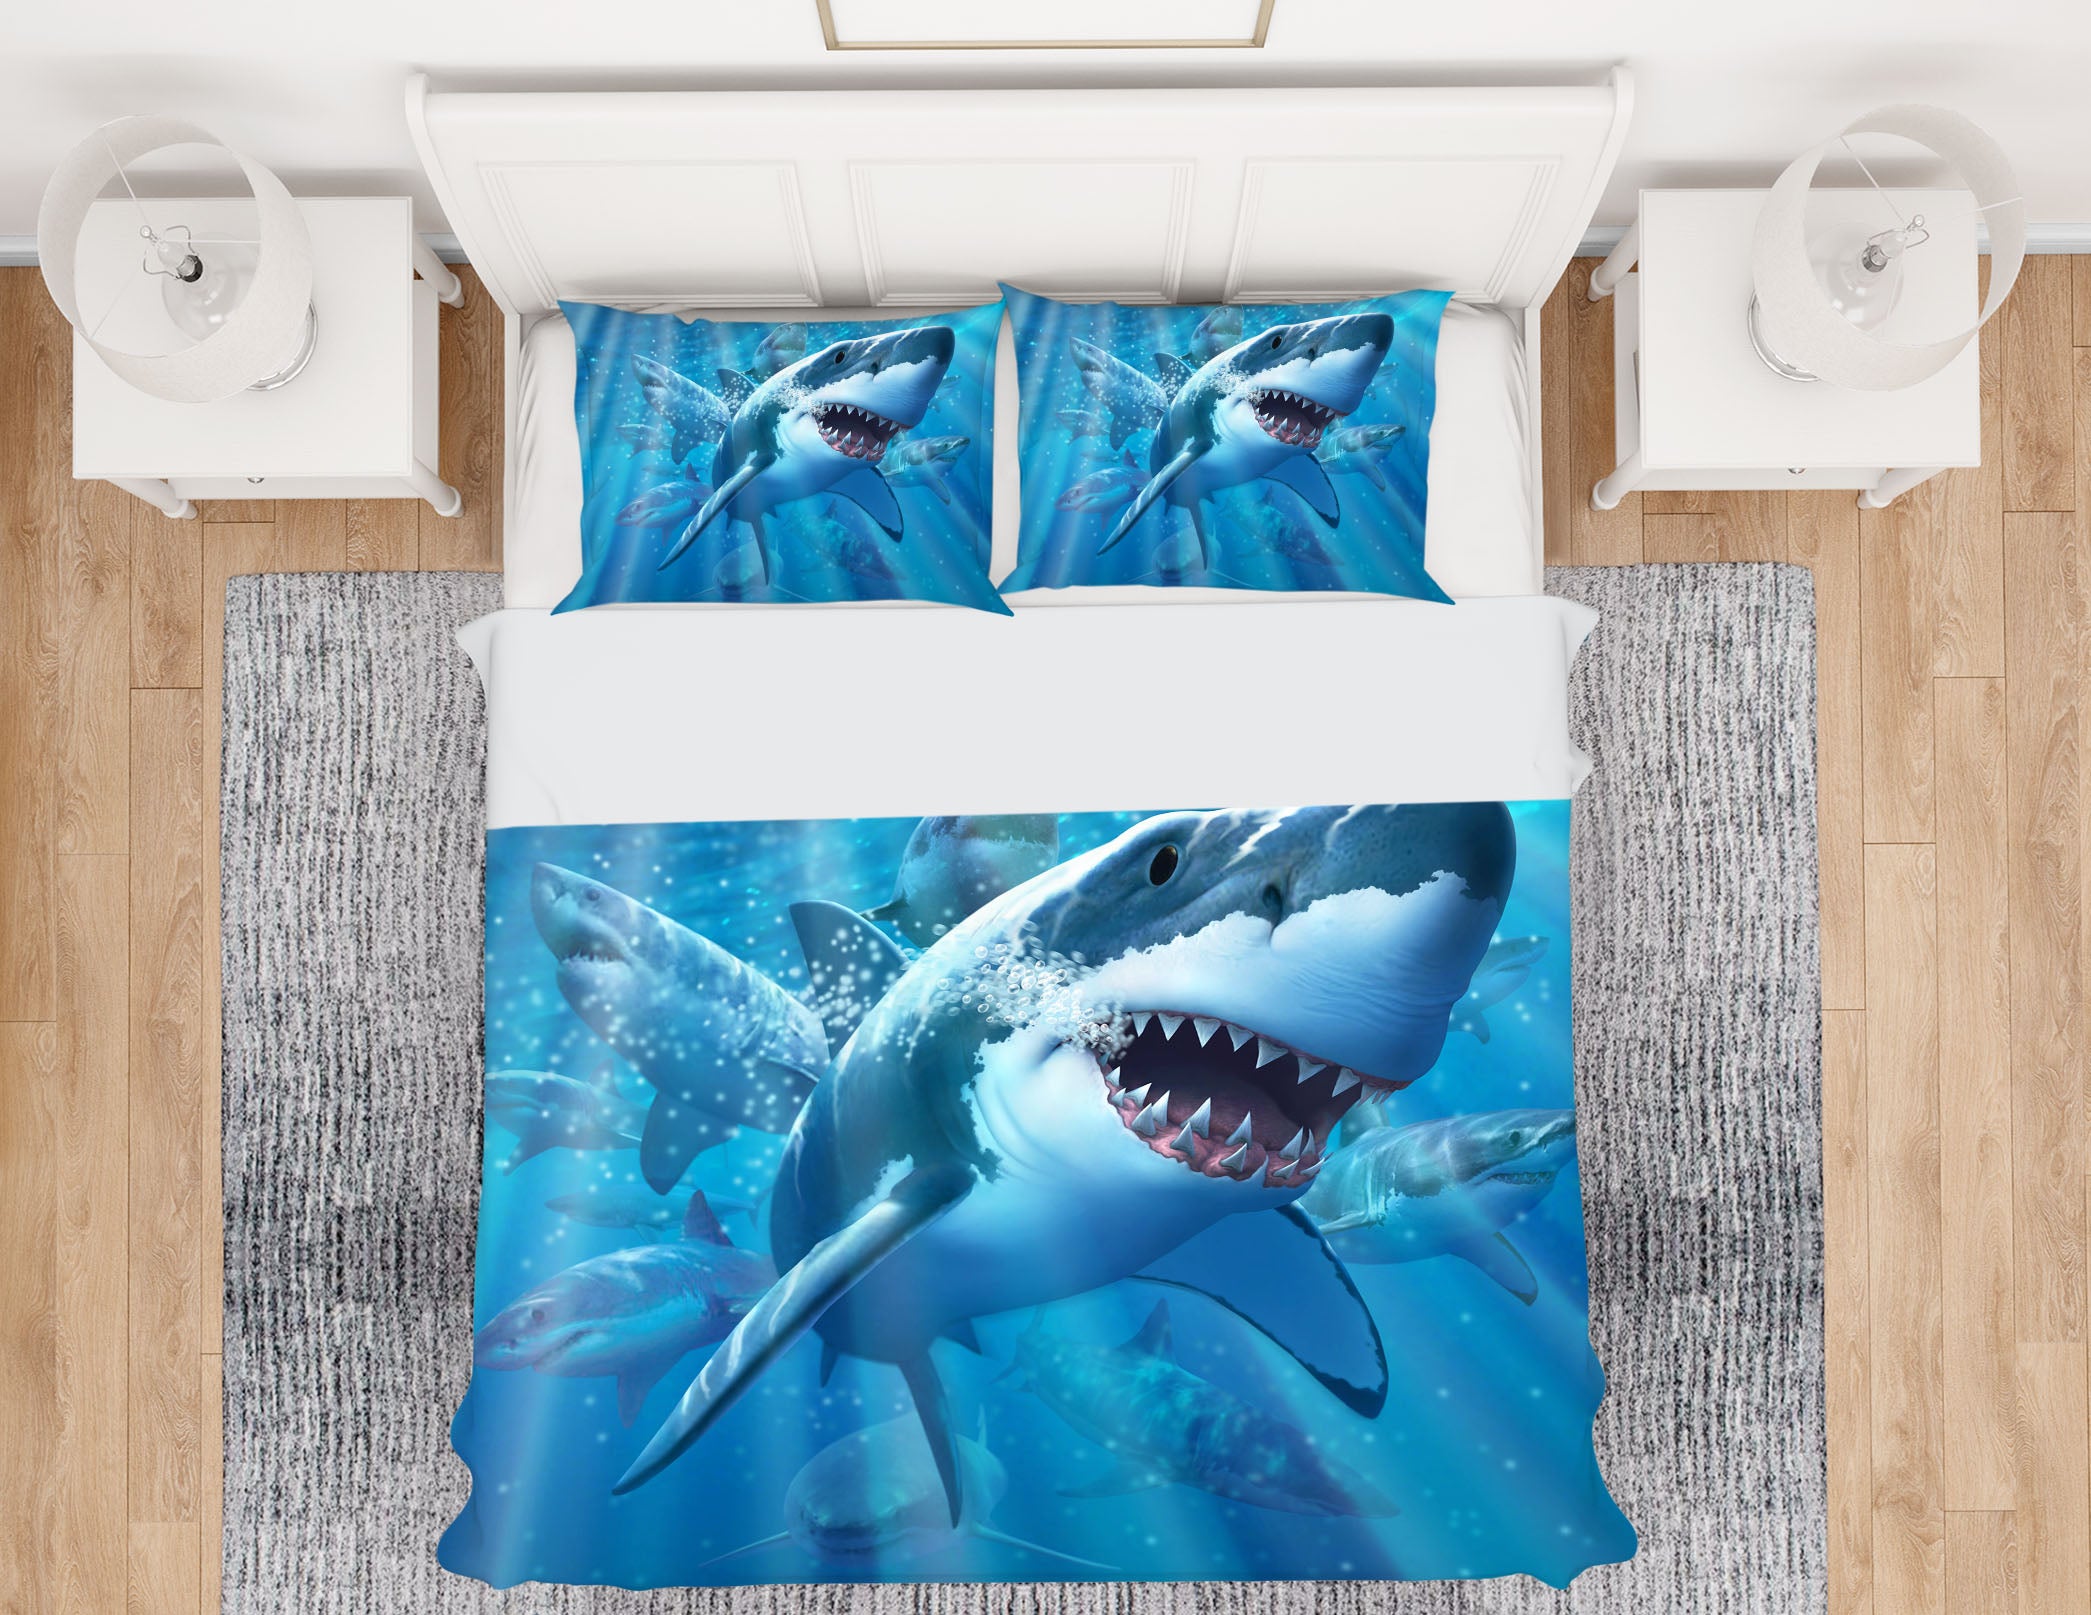 3D Great White Shark 2106 Jerry LoFaro bedding Bed Pillowcases Quilt